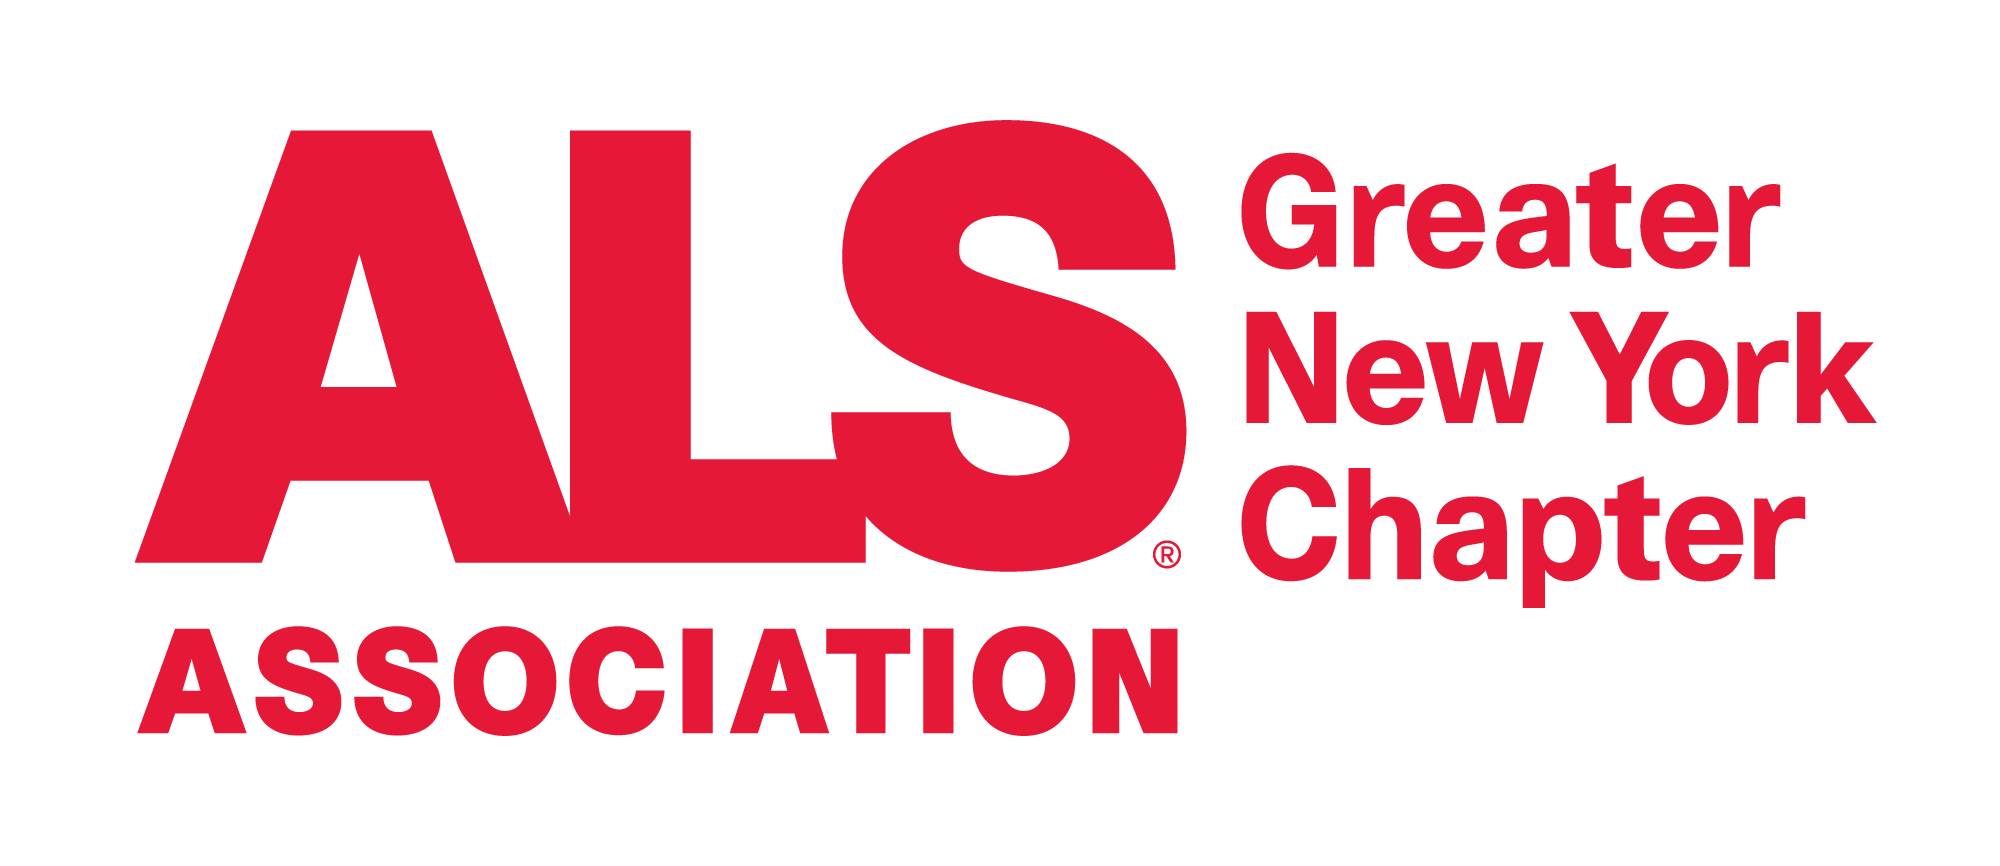 ALS Association - Greater New York Chapter